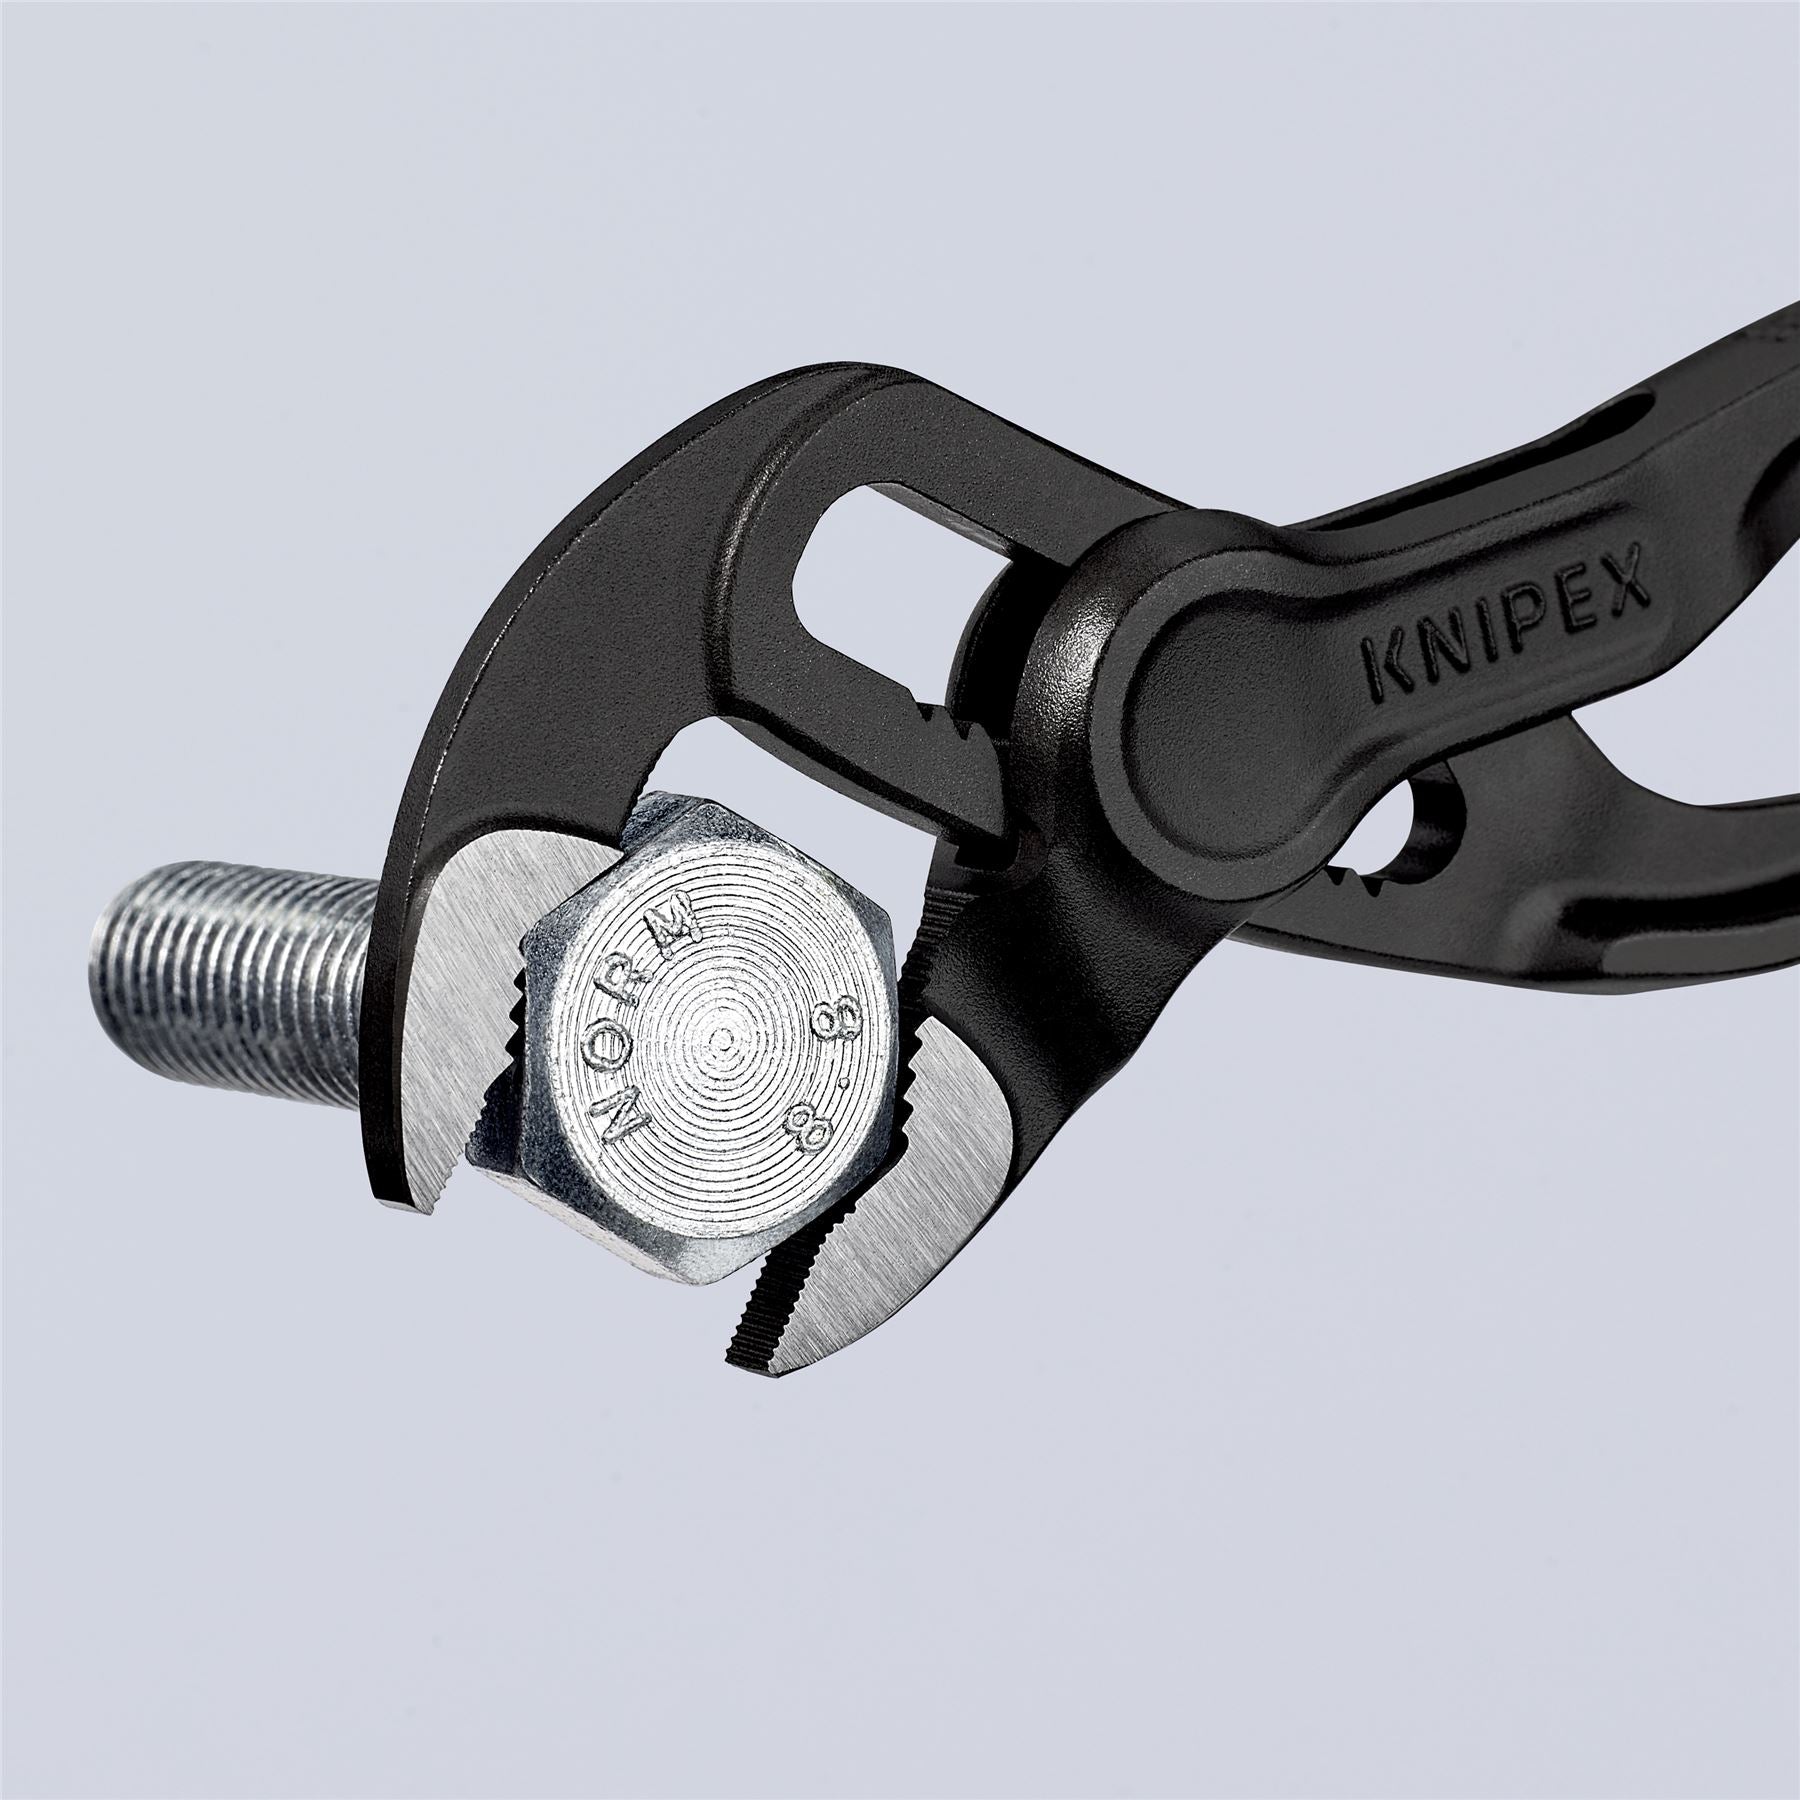 KNIPEX Cobra High Tech Water Pump Pliers 100-560 mm Choose Size